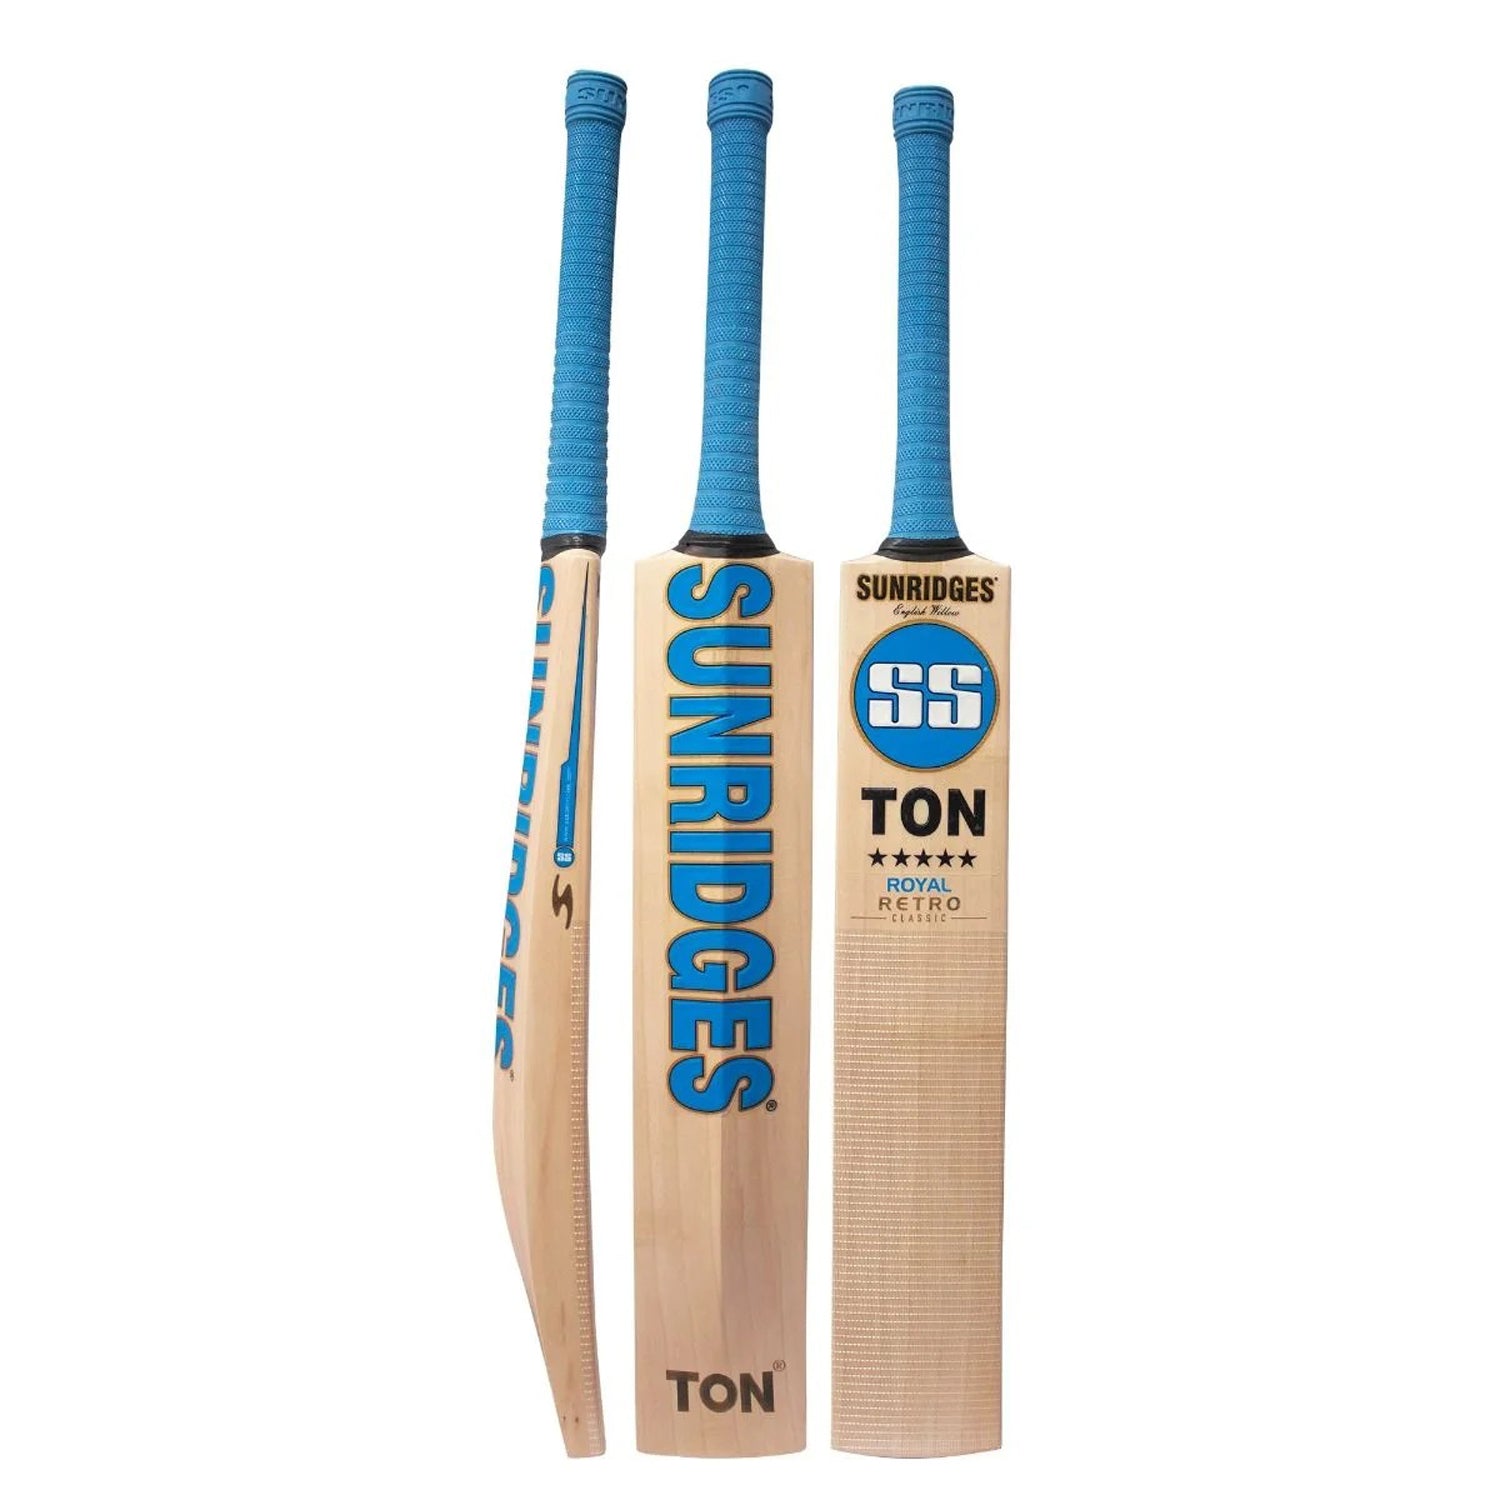 SS Ton Retro Royal Classic English Willow Cricket Bat - Best Price online Prokicksports.com